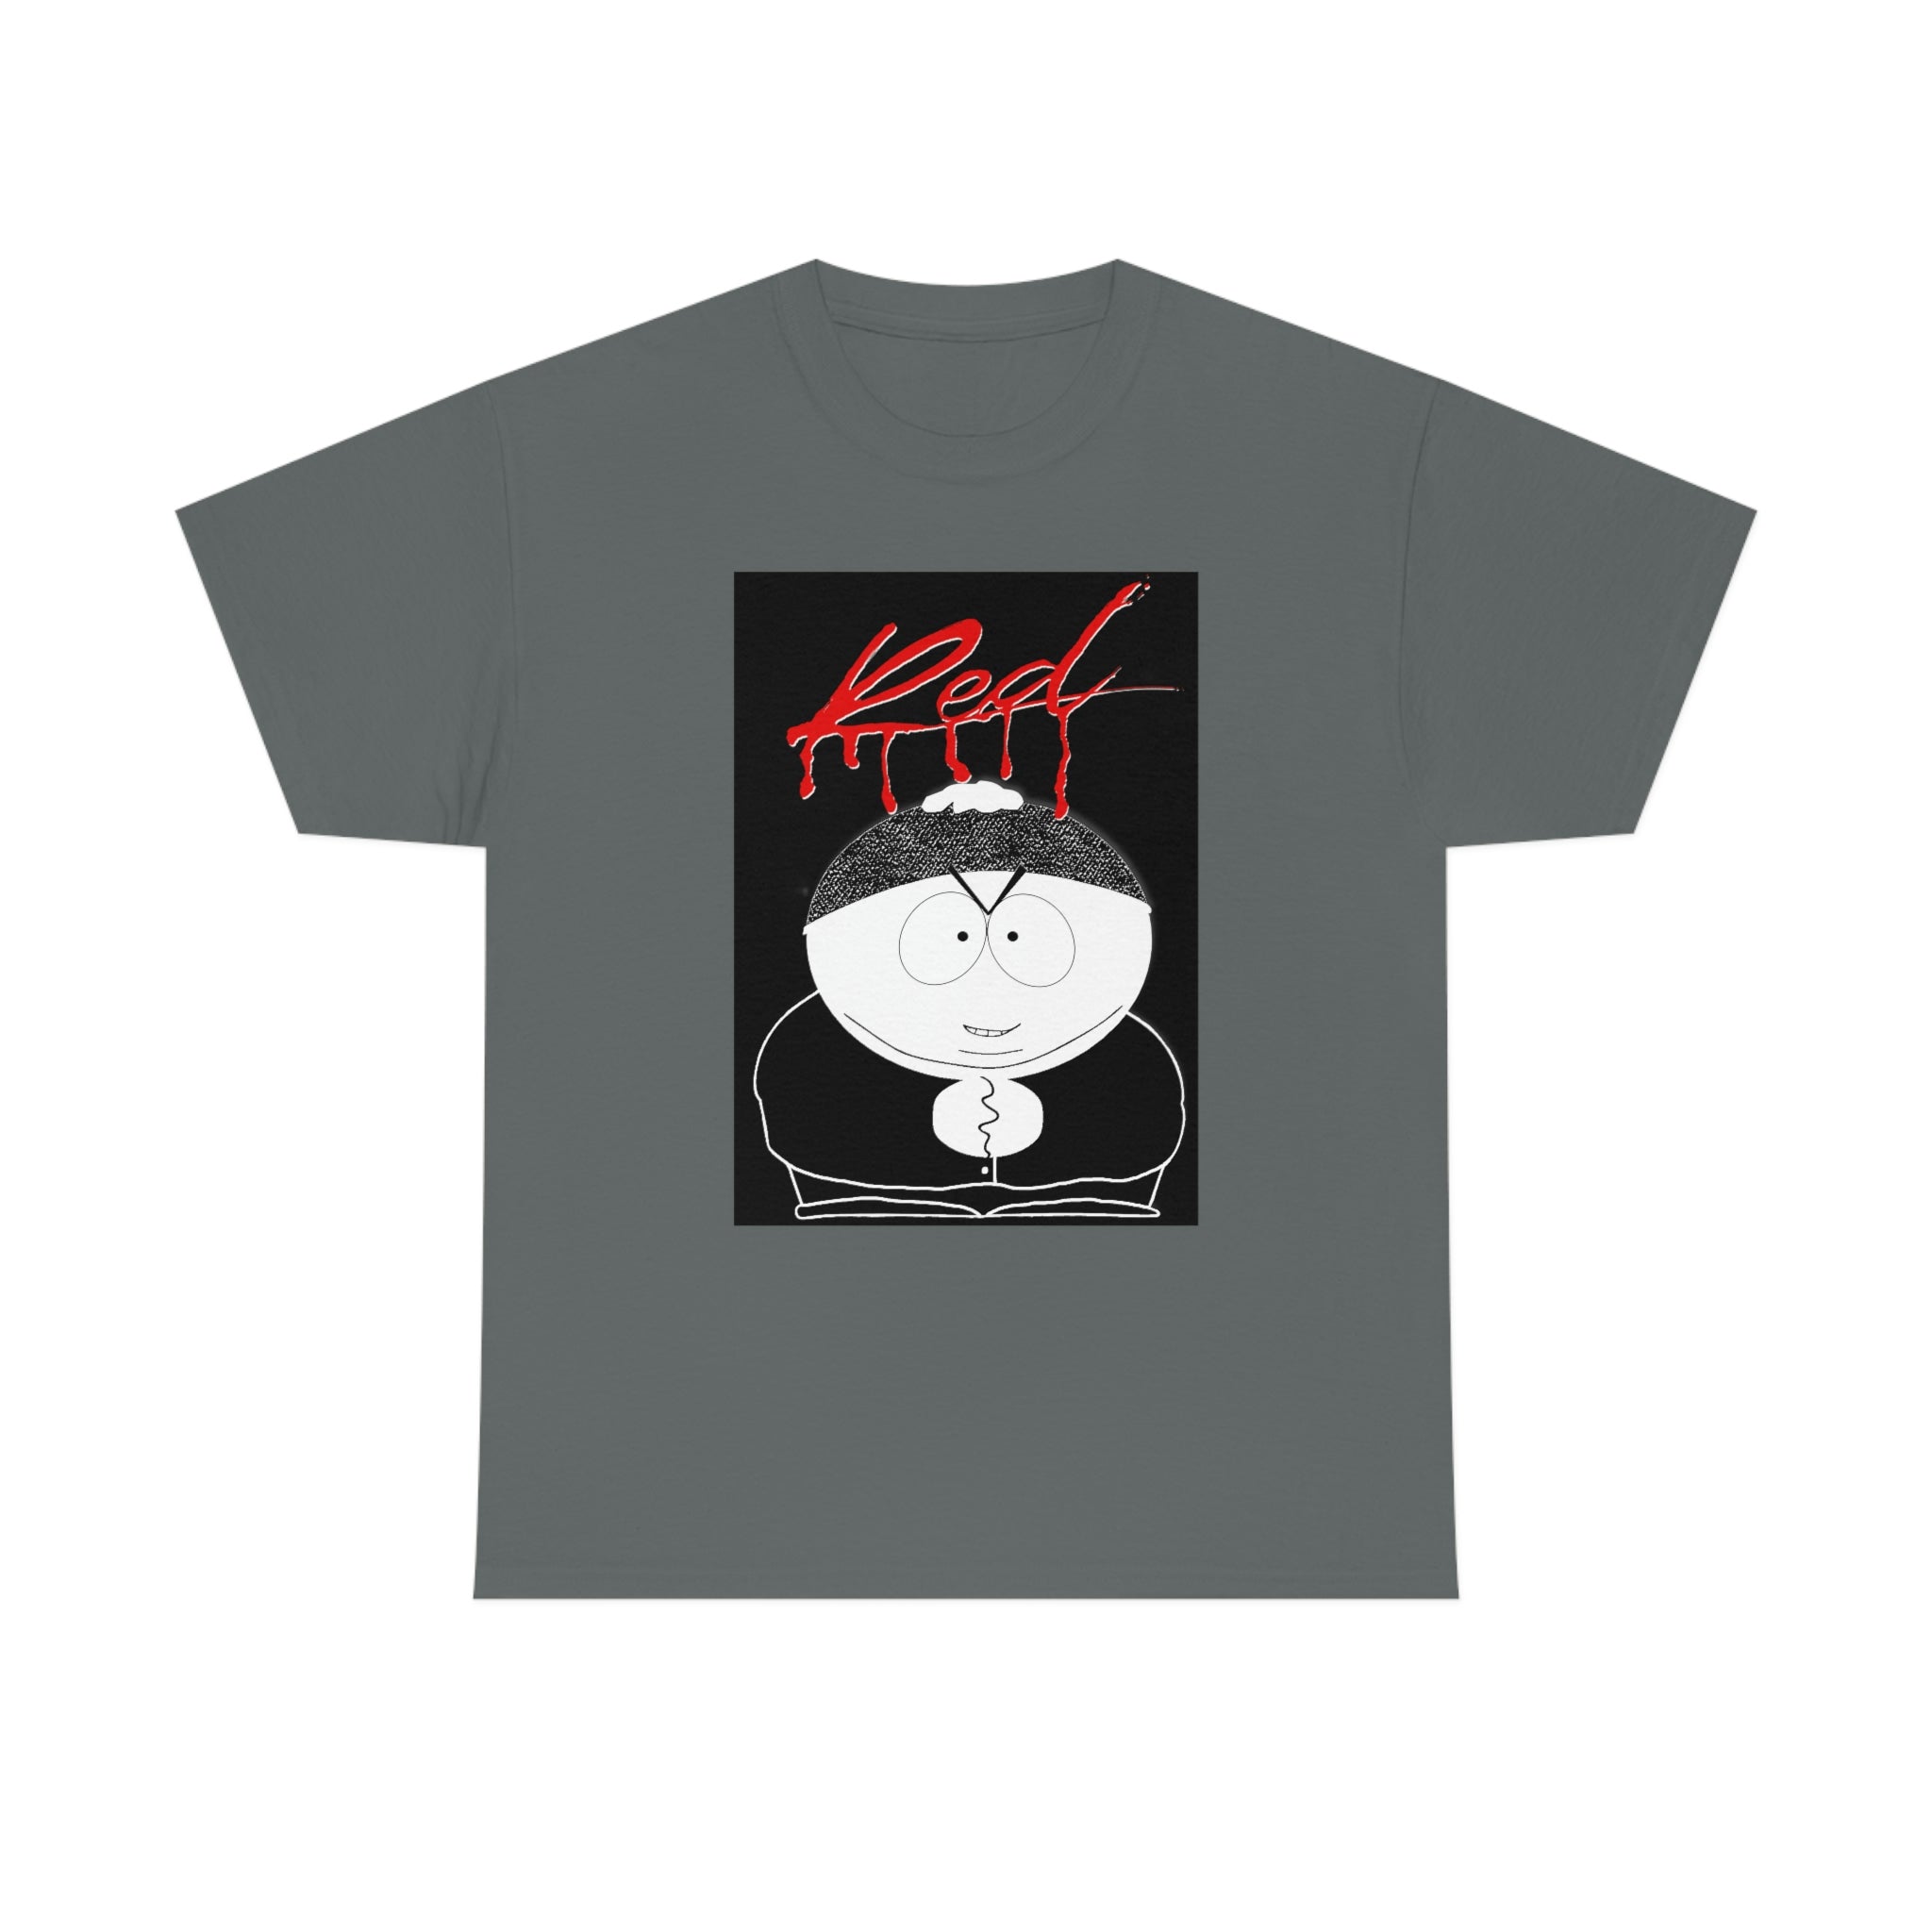 Playboi Cartman (Eric Cartman from South Park) Whole Lotta Red Album Cover - Unisex Heavy Cotton Tee